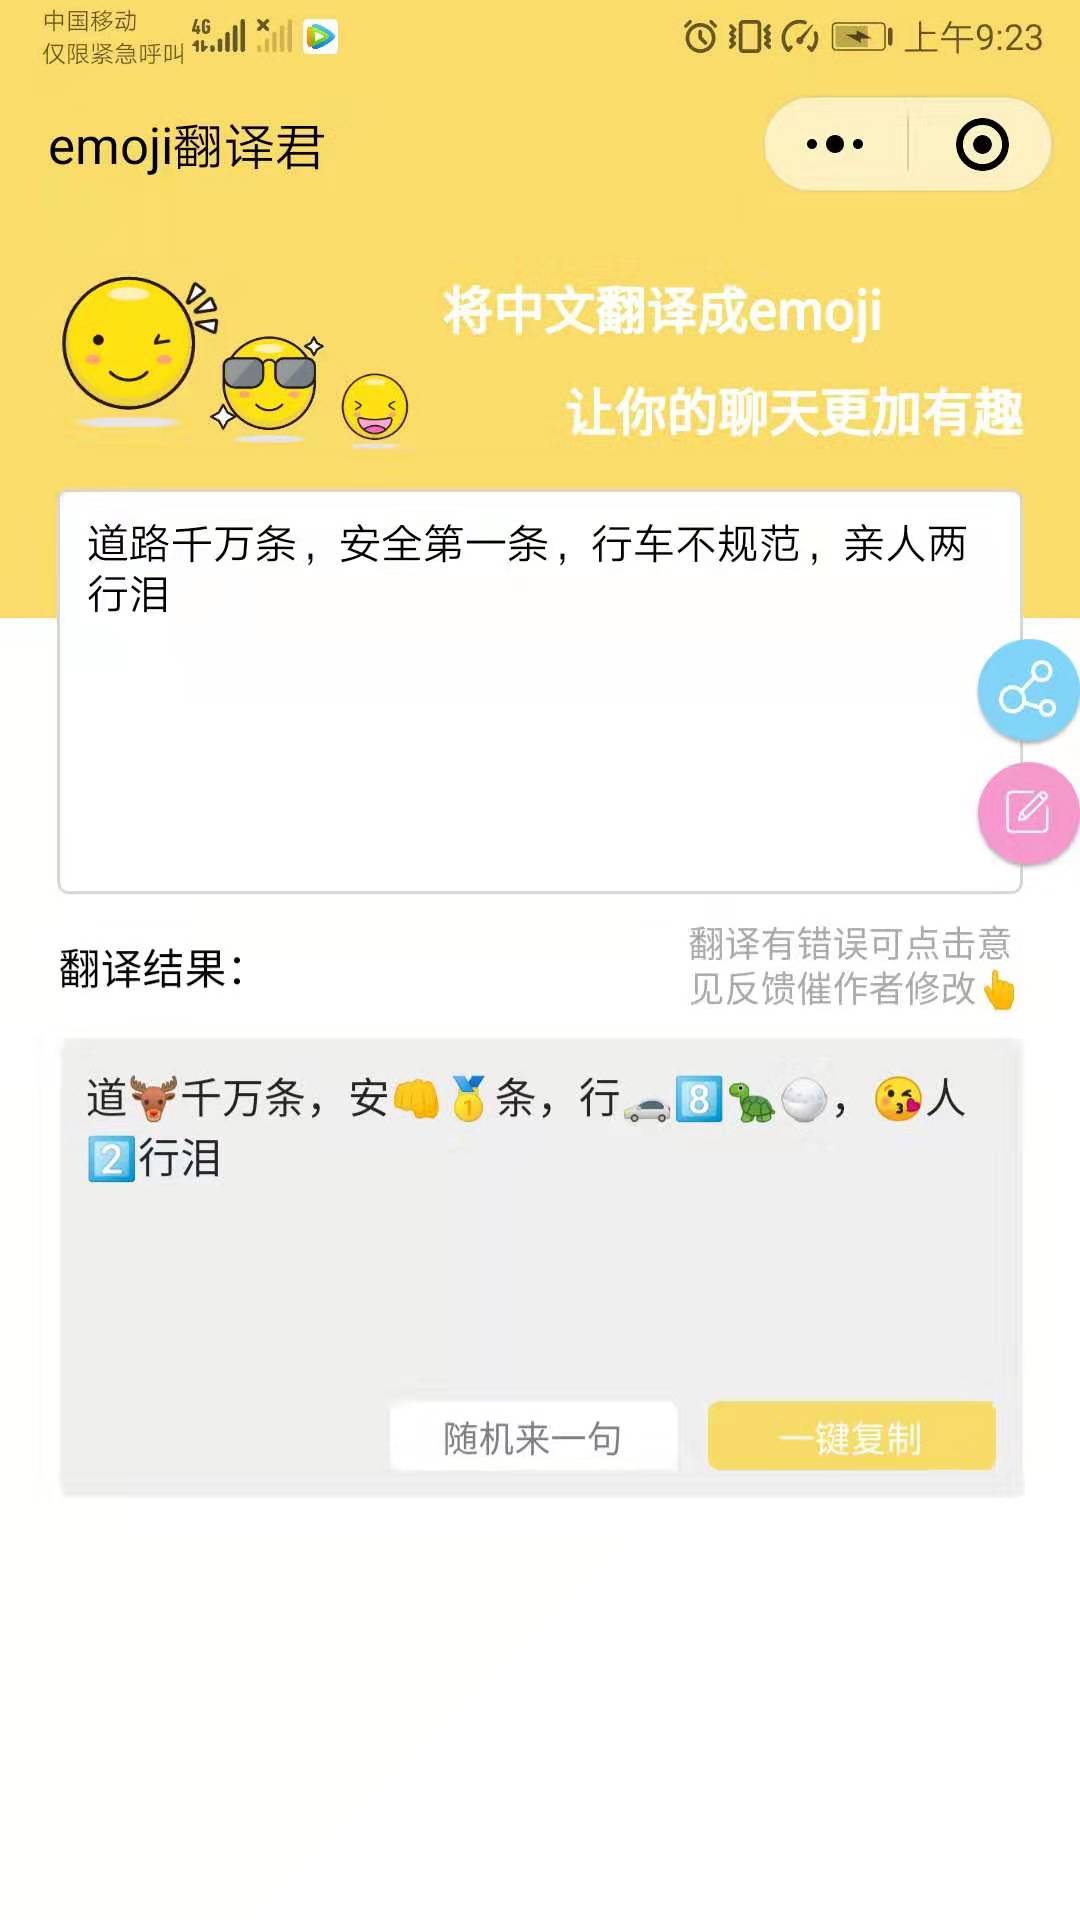 emoji翻译君_emoji翻译君小程序_emoji翻译君微信小程序